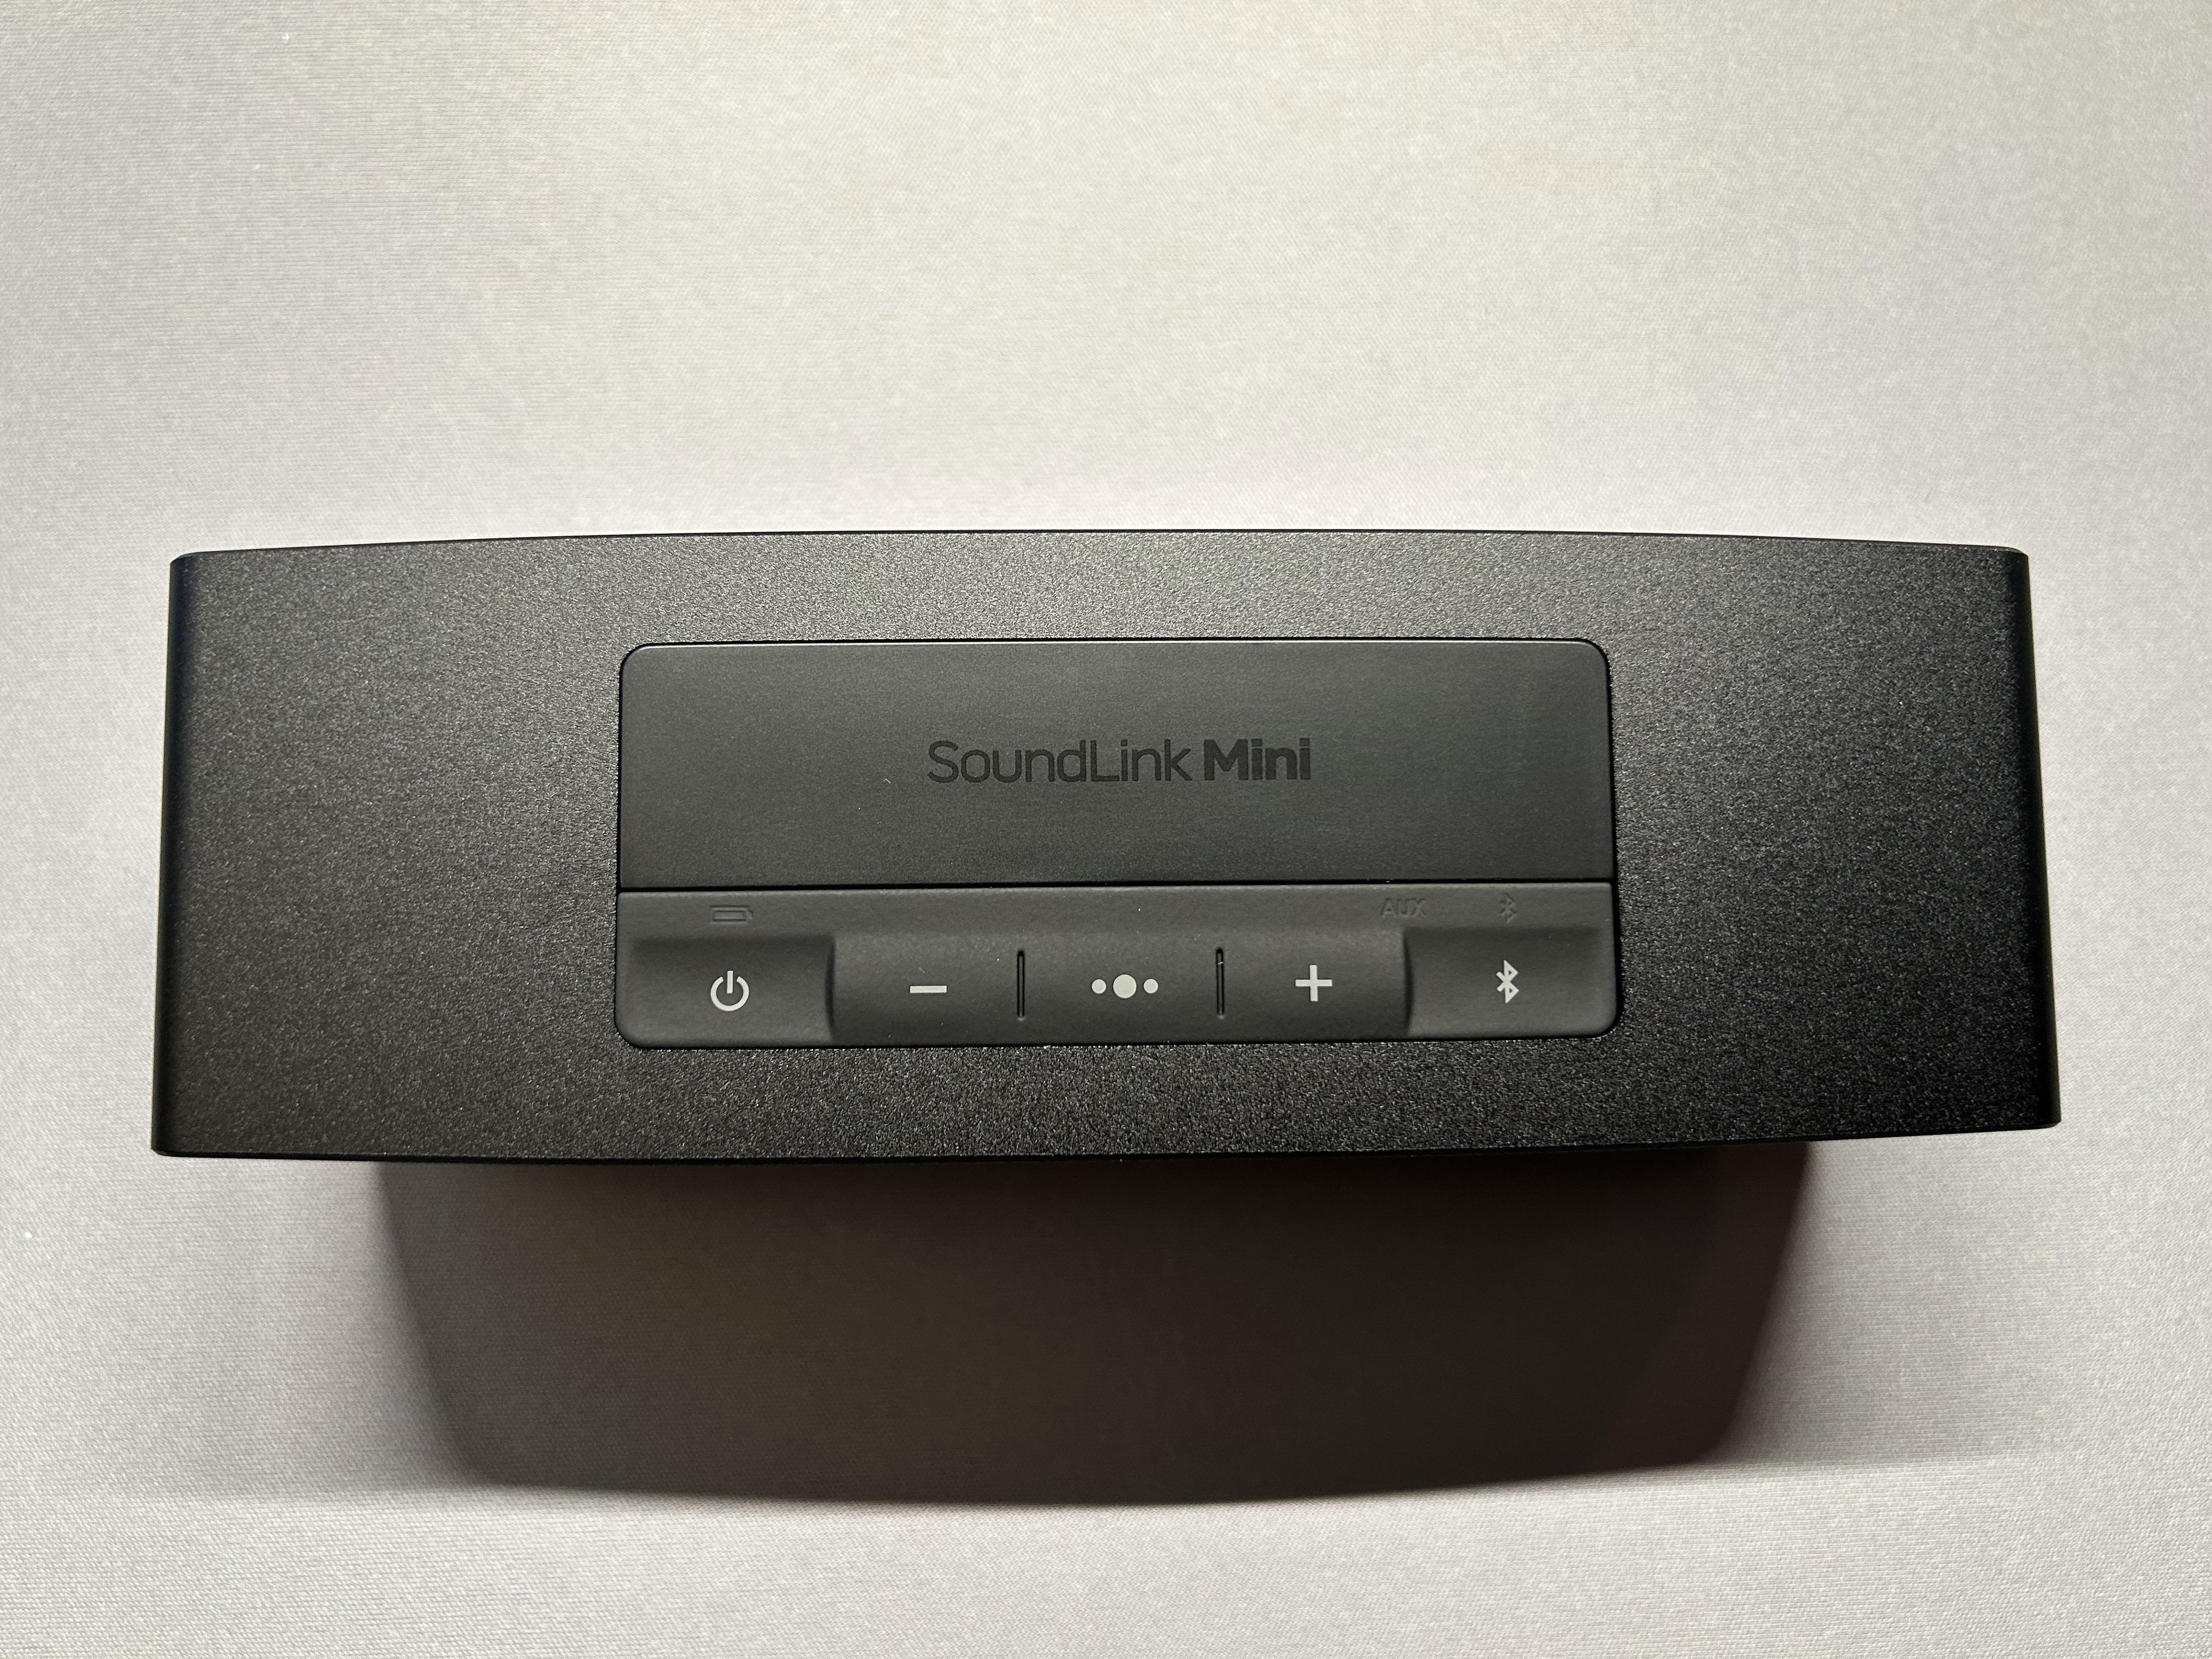 Bose SoundLink Mini II Special Edition Bluetooth スピーカー 外部入力端子　USB-C　有線接続